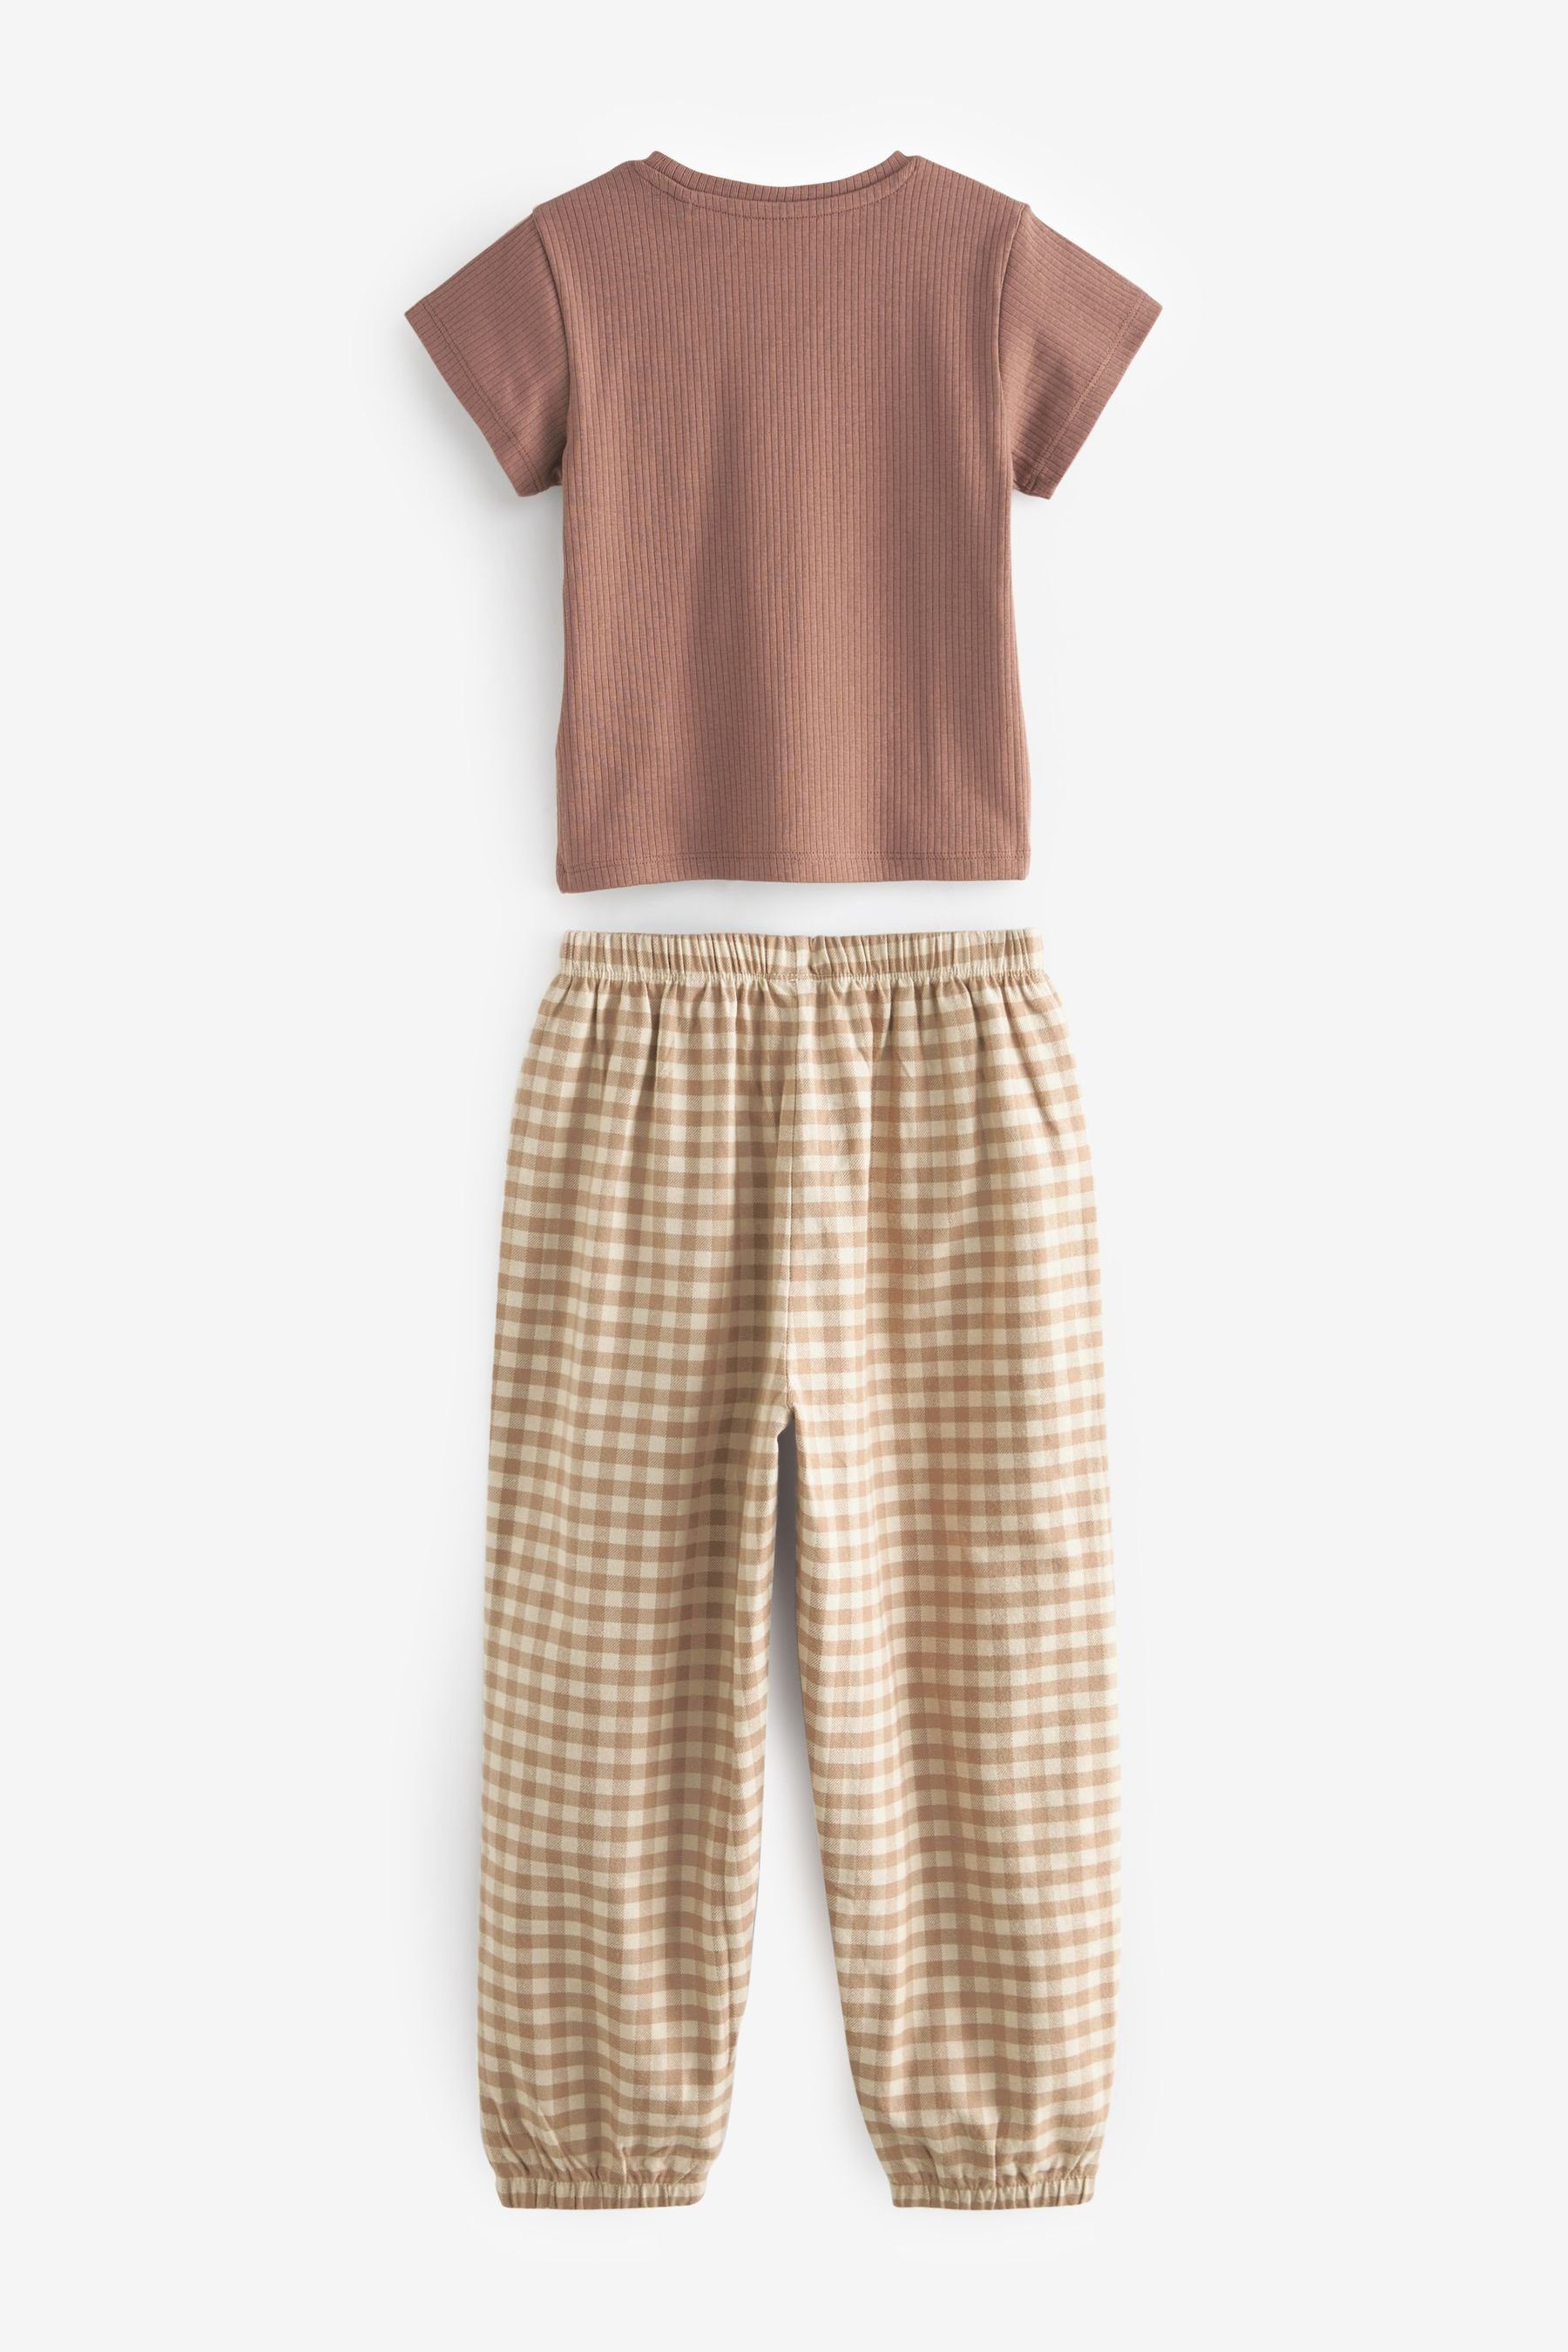 Next Pyjama Jogger Schlafanzug (2 Gingham Brown/Cream tlg)